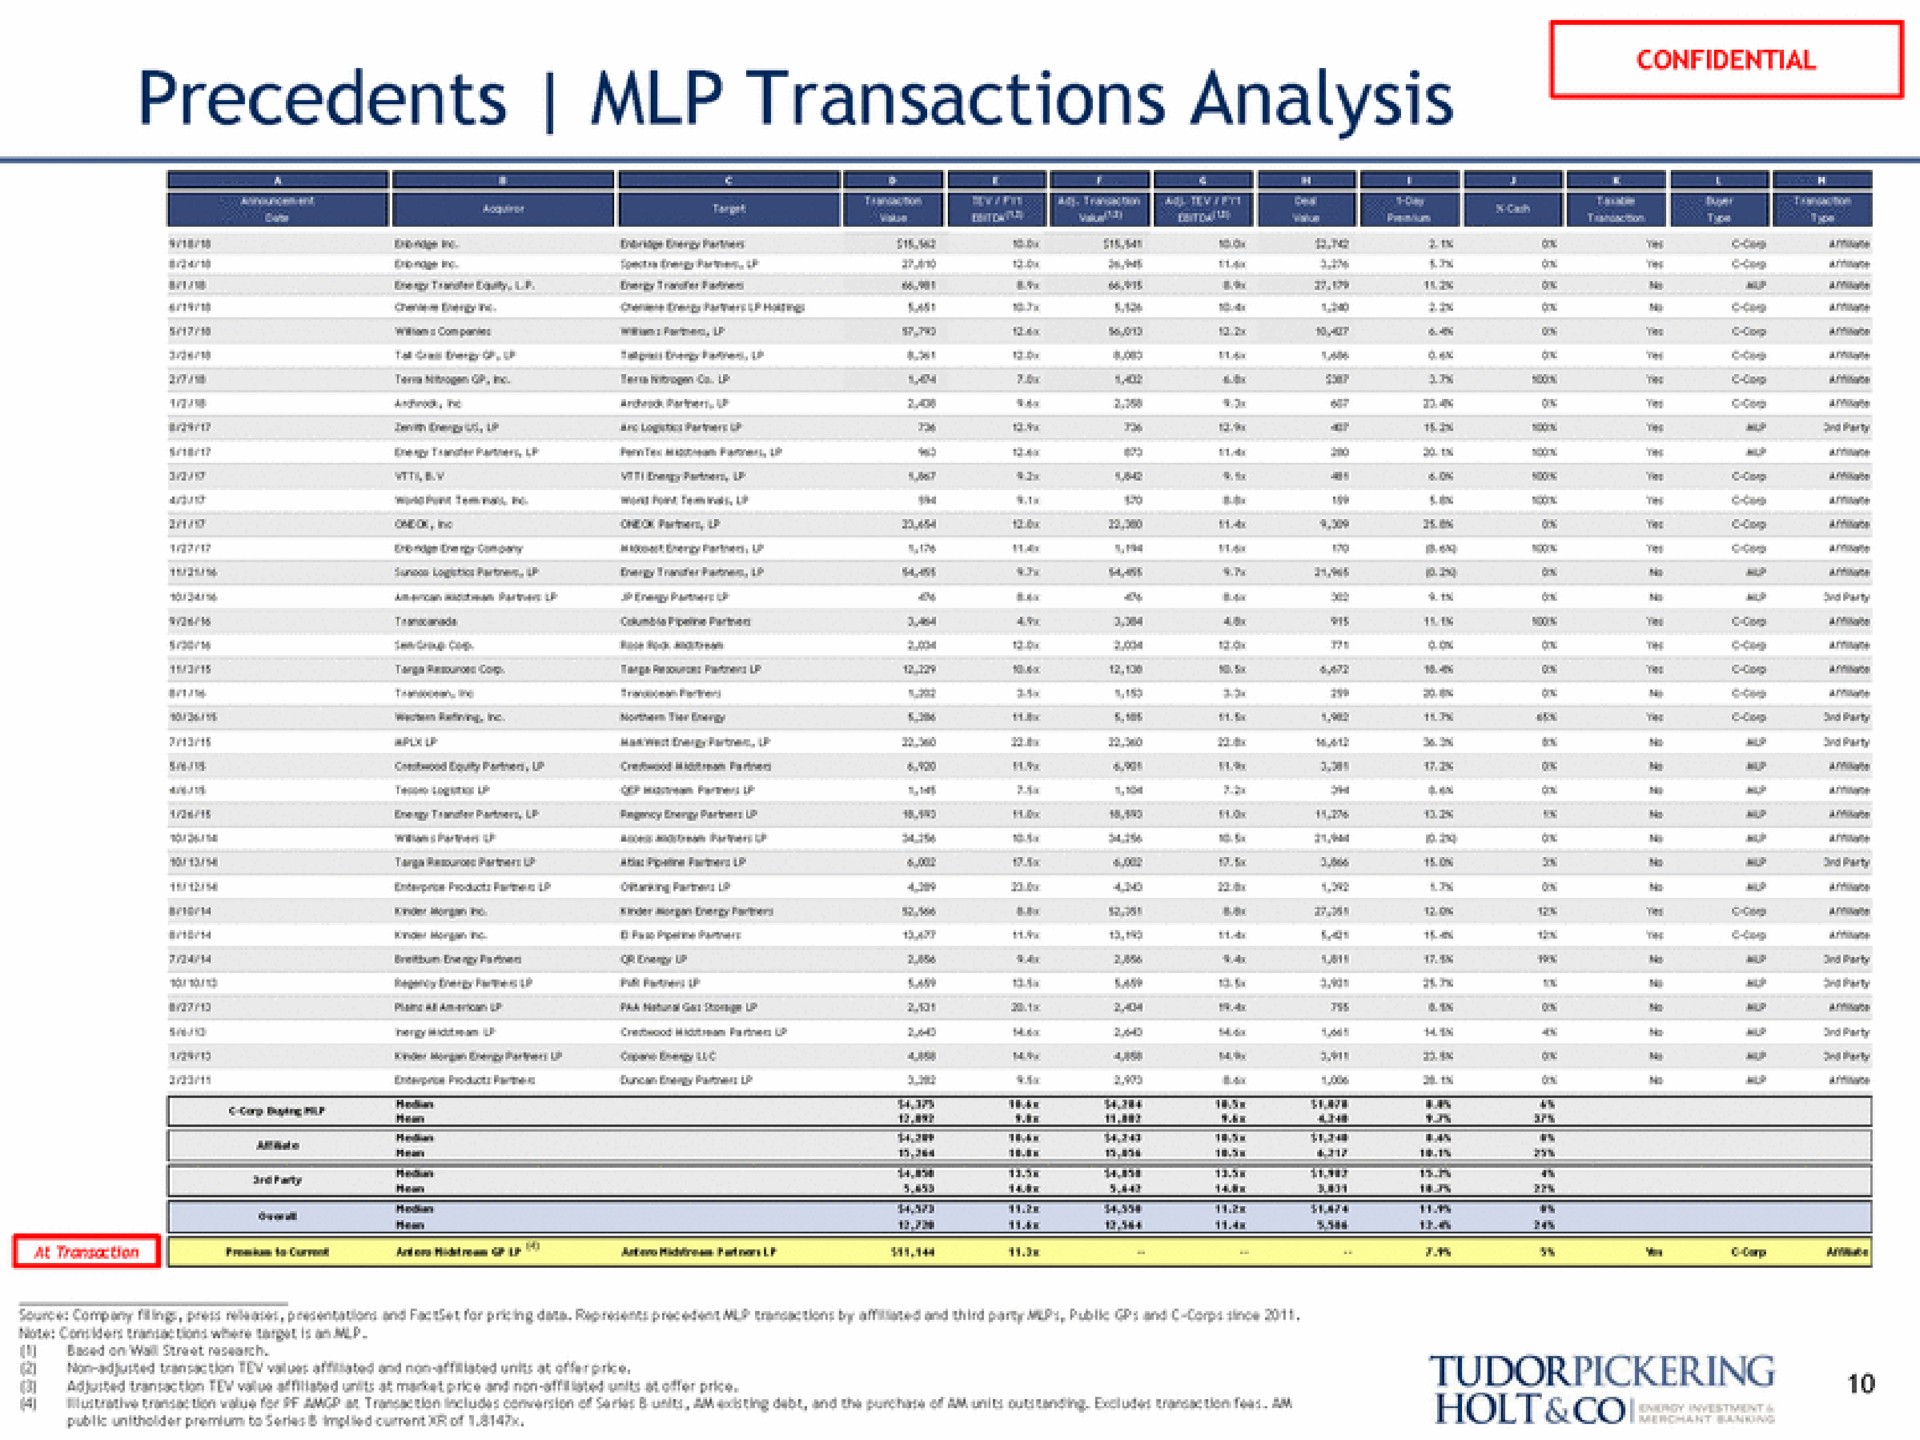 precedents transactions analysis pickering | Tudor, Pickering, Holt & Co